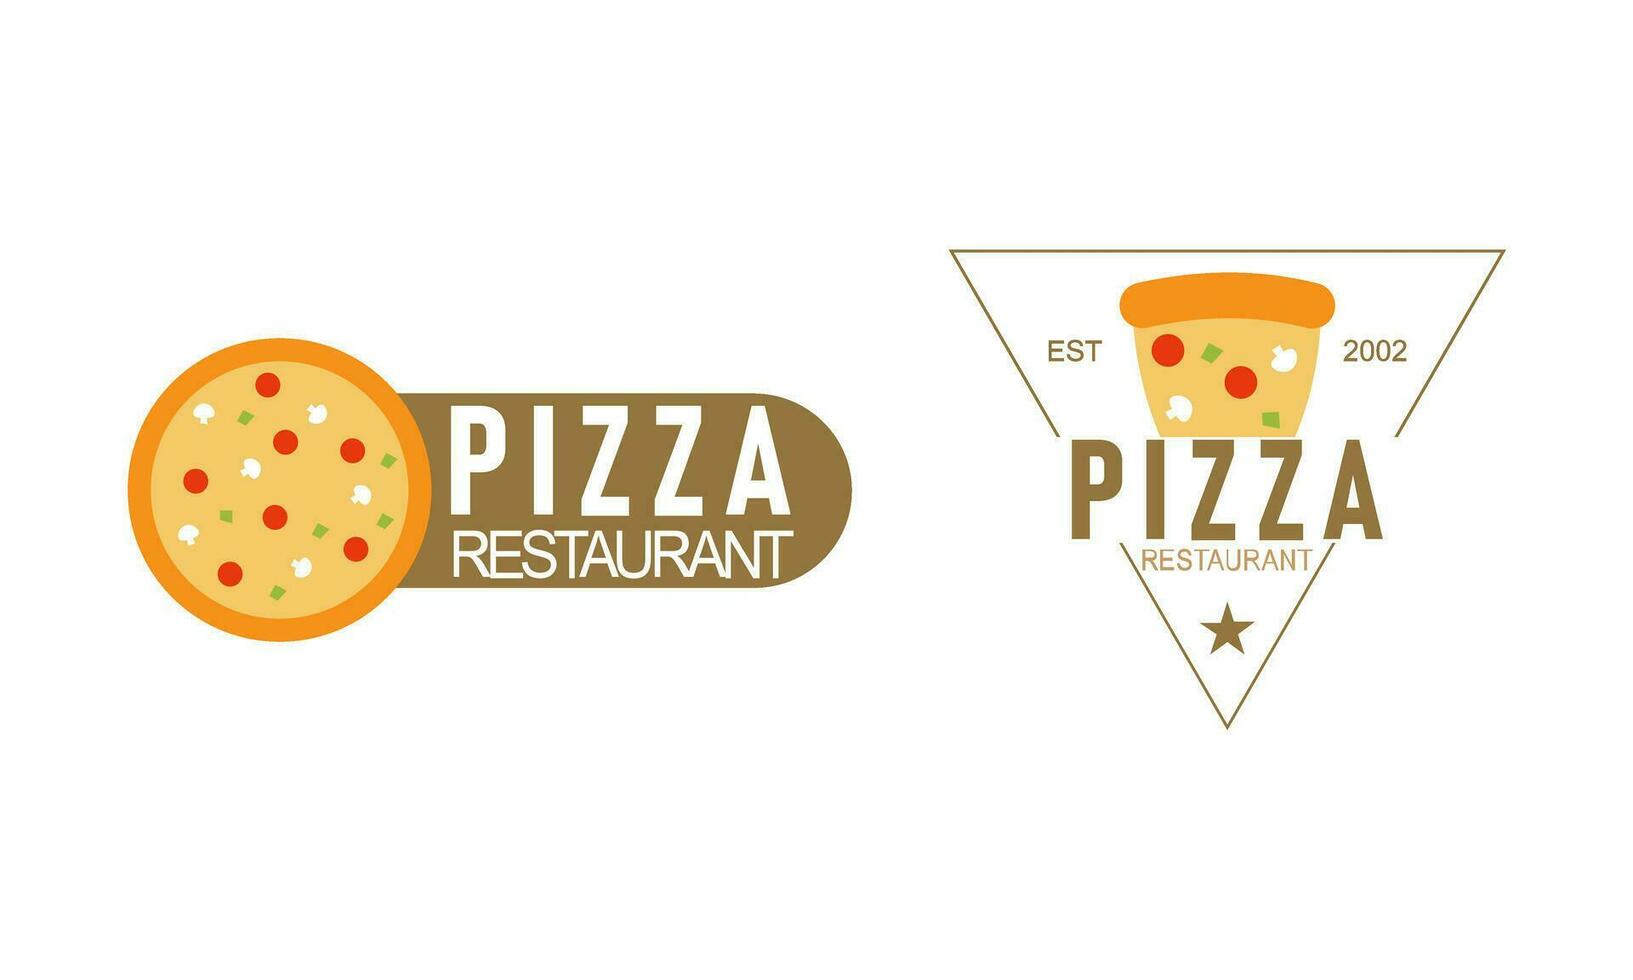 Pizza Logo, Symbole und Design Elemente zum Pizzeria vektor